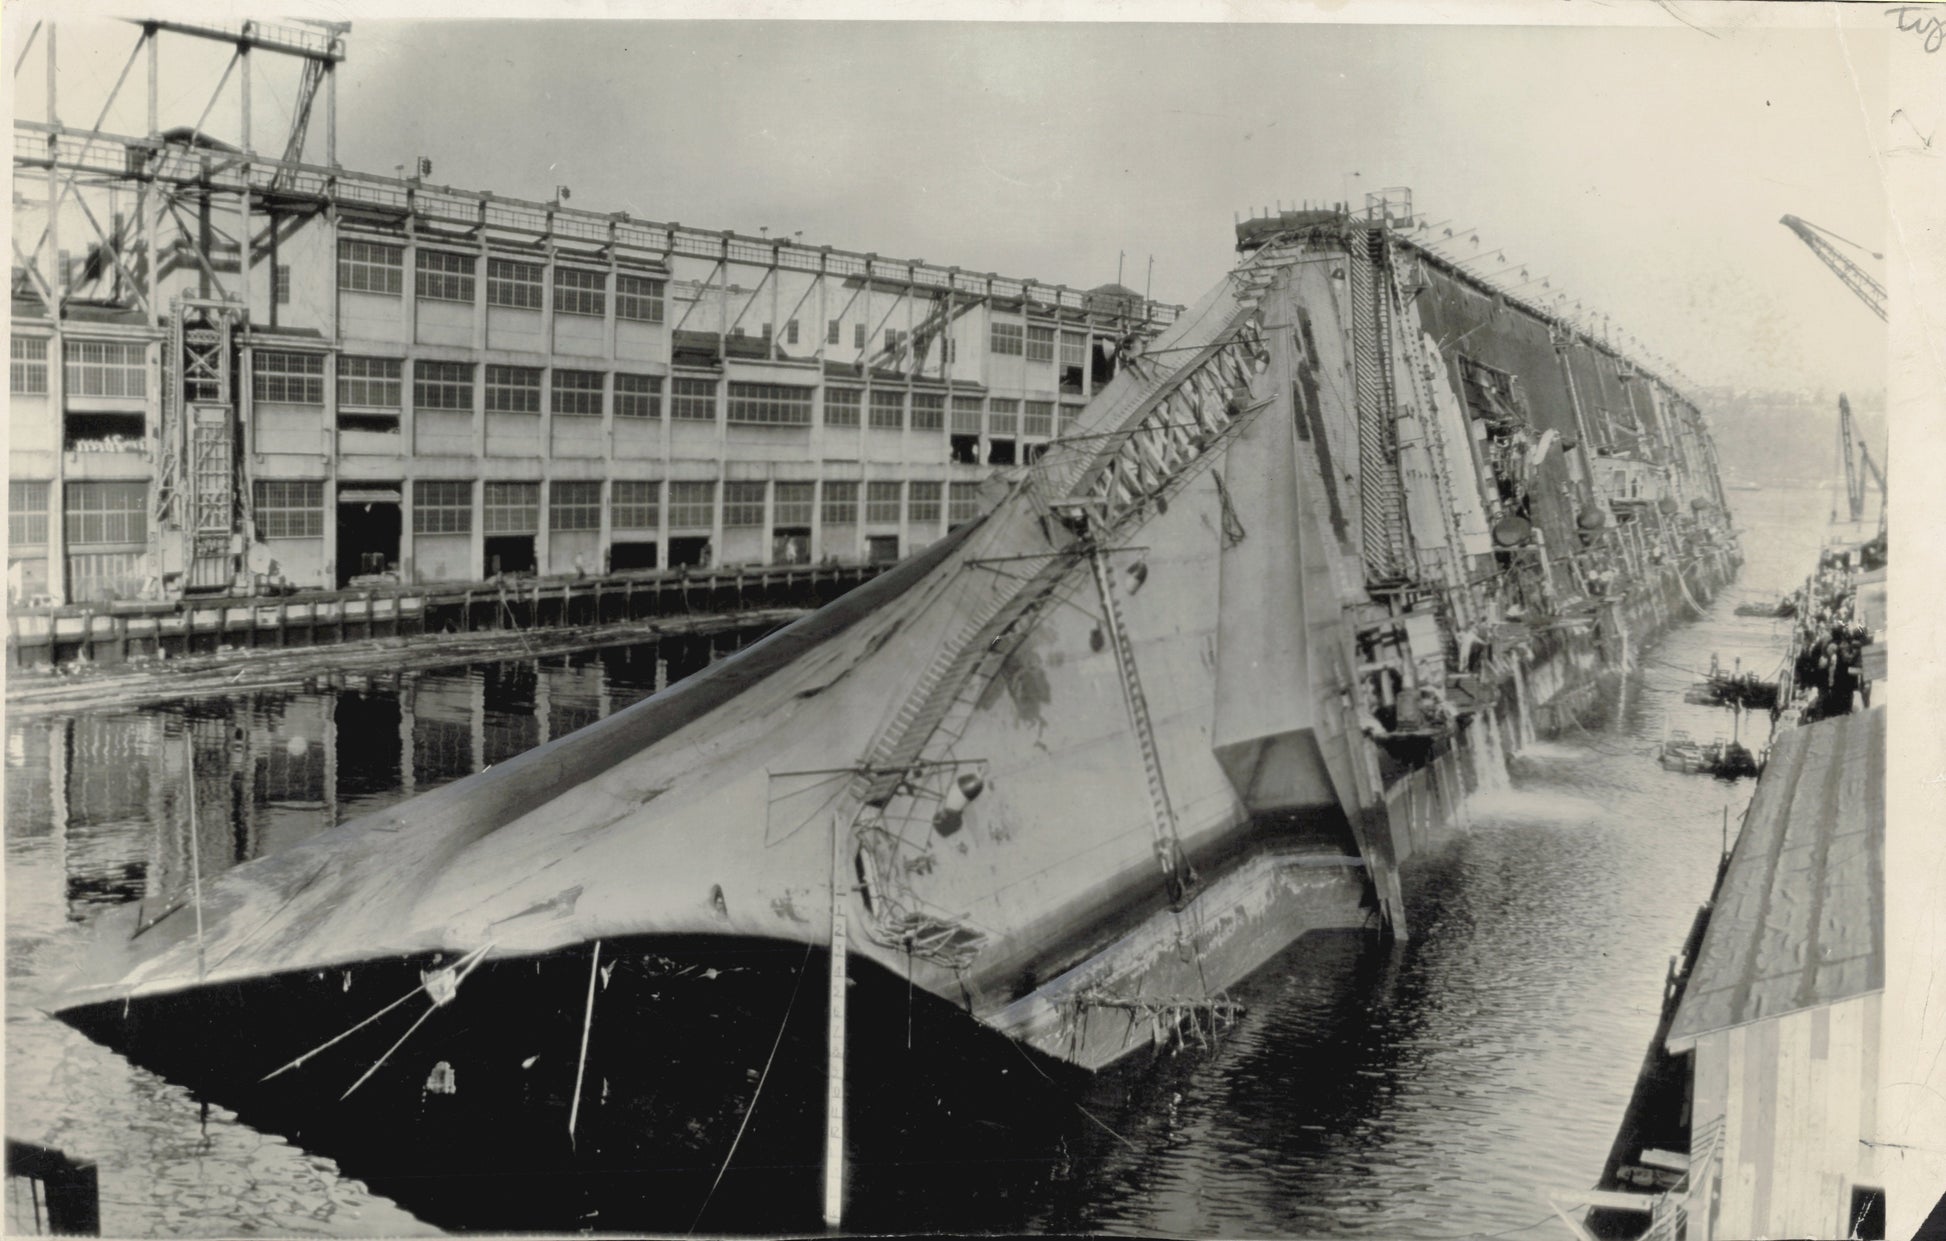 Normandie Oversized Press Photo (c. 1942) Military Naval Normandie Oversized Photograph Press Photo Ship